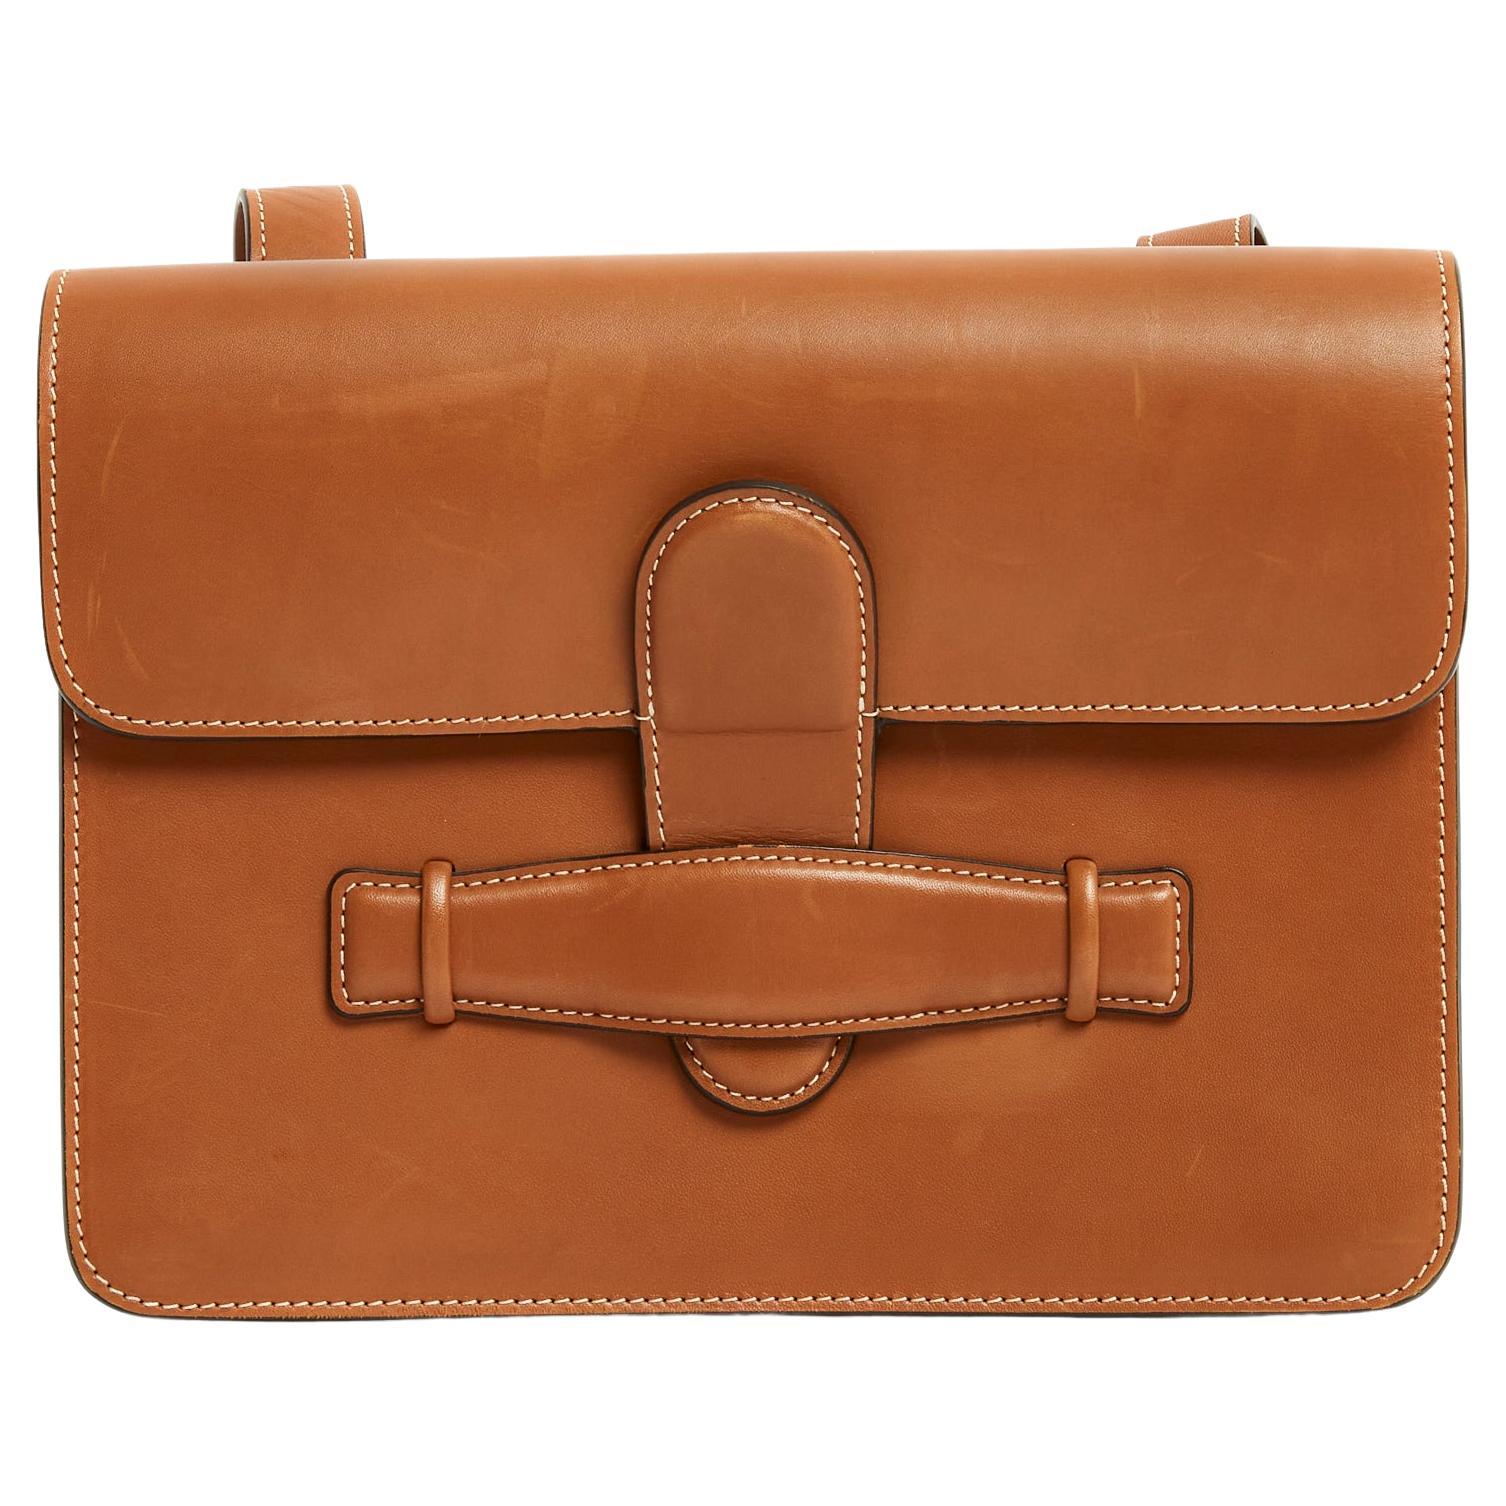 2018 Phoebe Philo Celine Symmetrical Bag natural leather For Sale